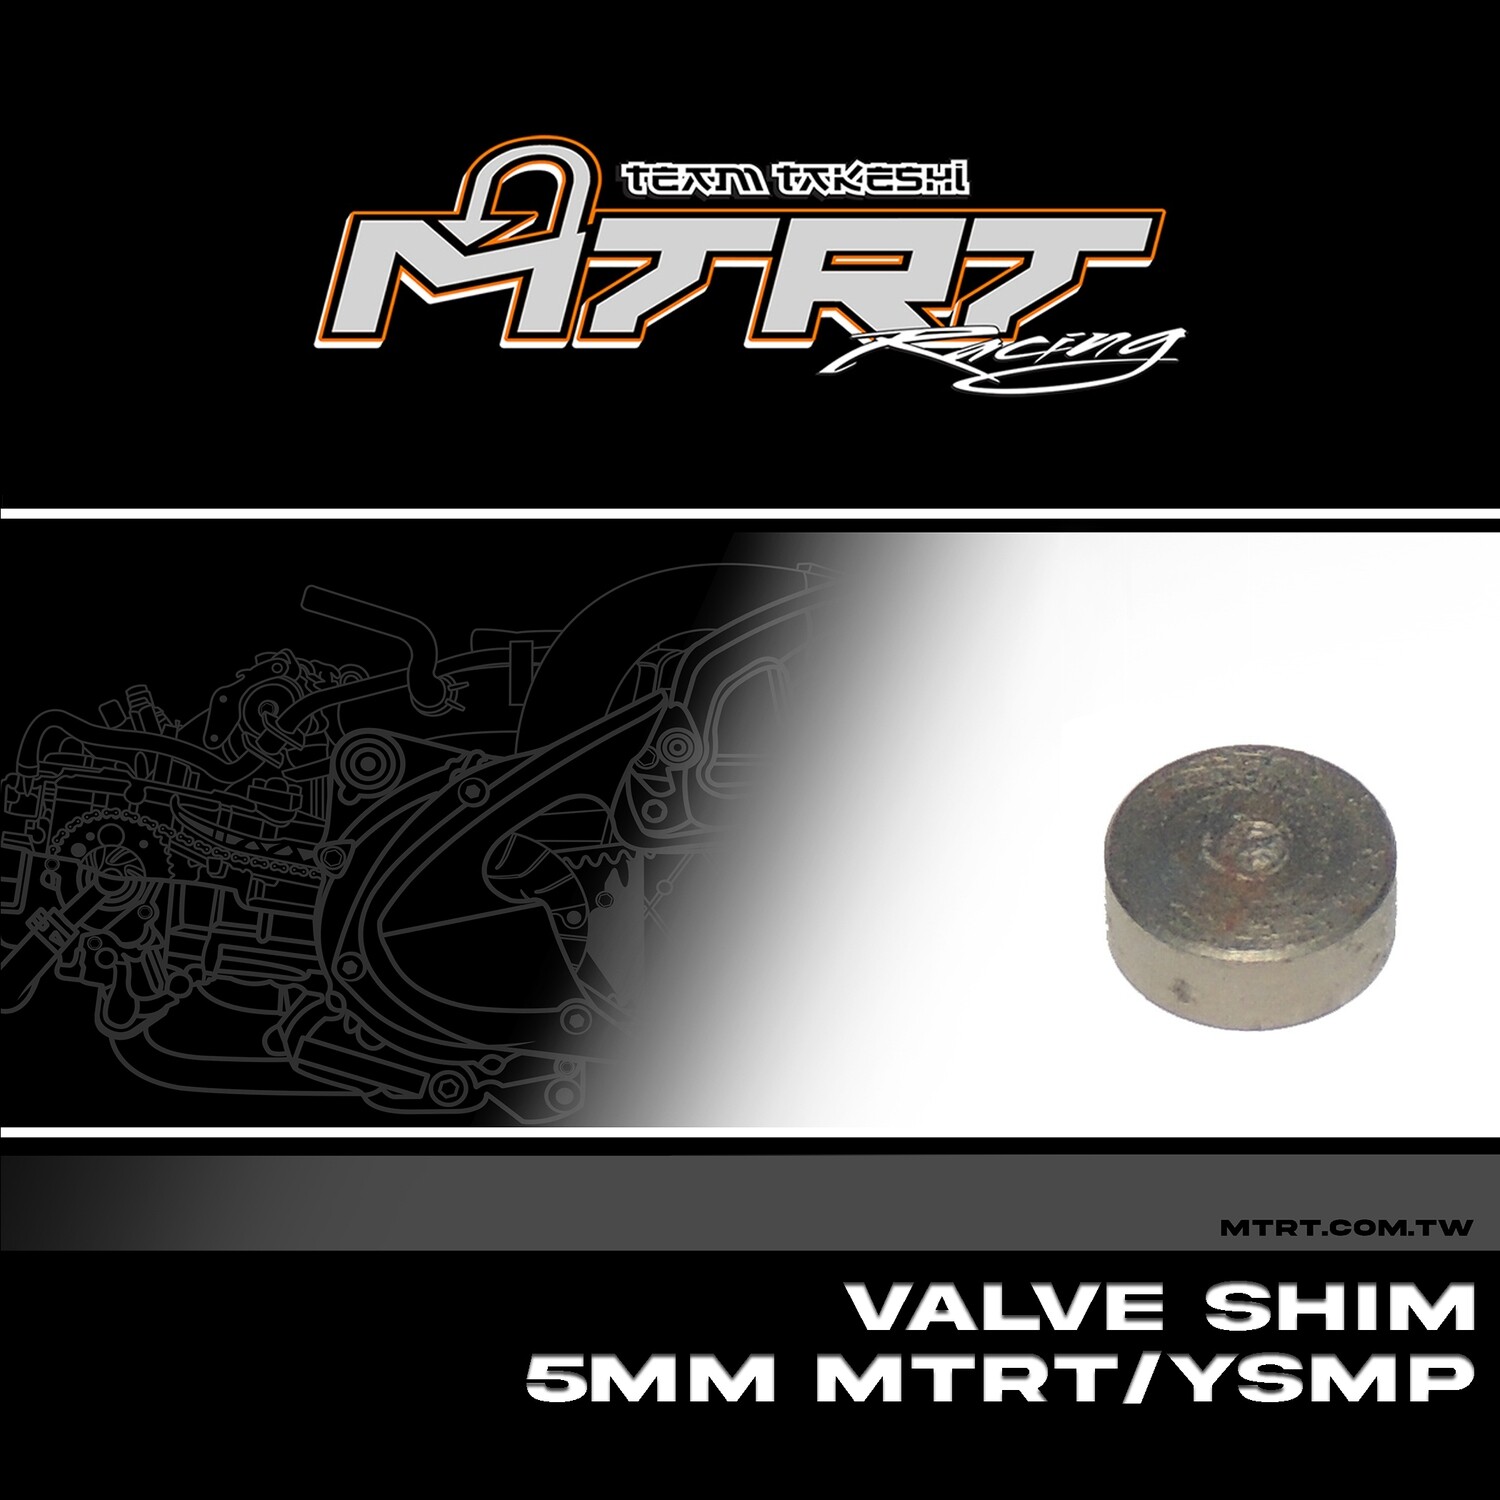 VALVE SHIM ANY VALVES 5mm MTRT/YSMP ( 2pcs )